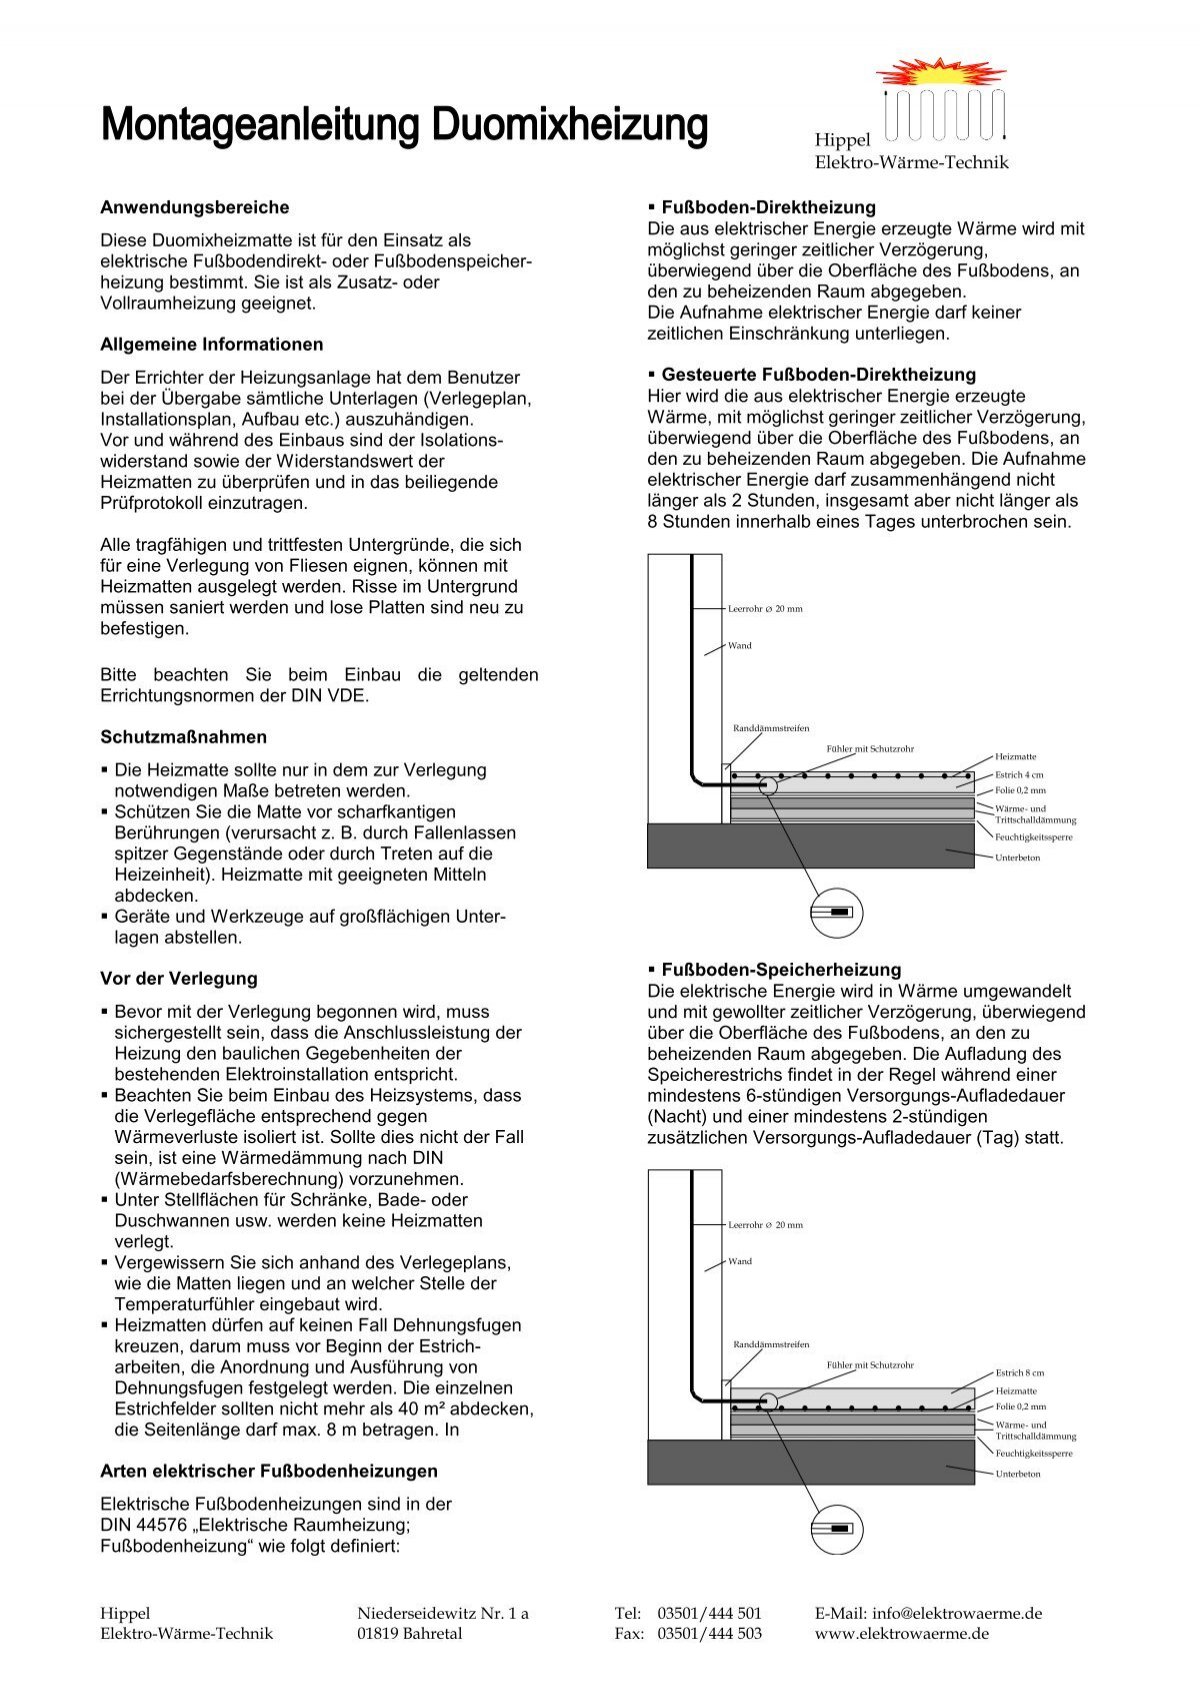 Montageanleitung Duomix (PDF) - Hippel Elektro-Wärme-Technik